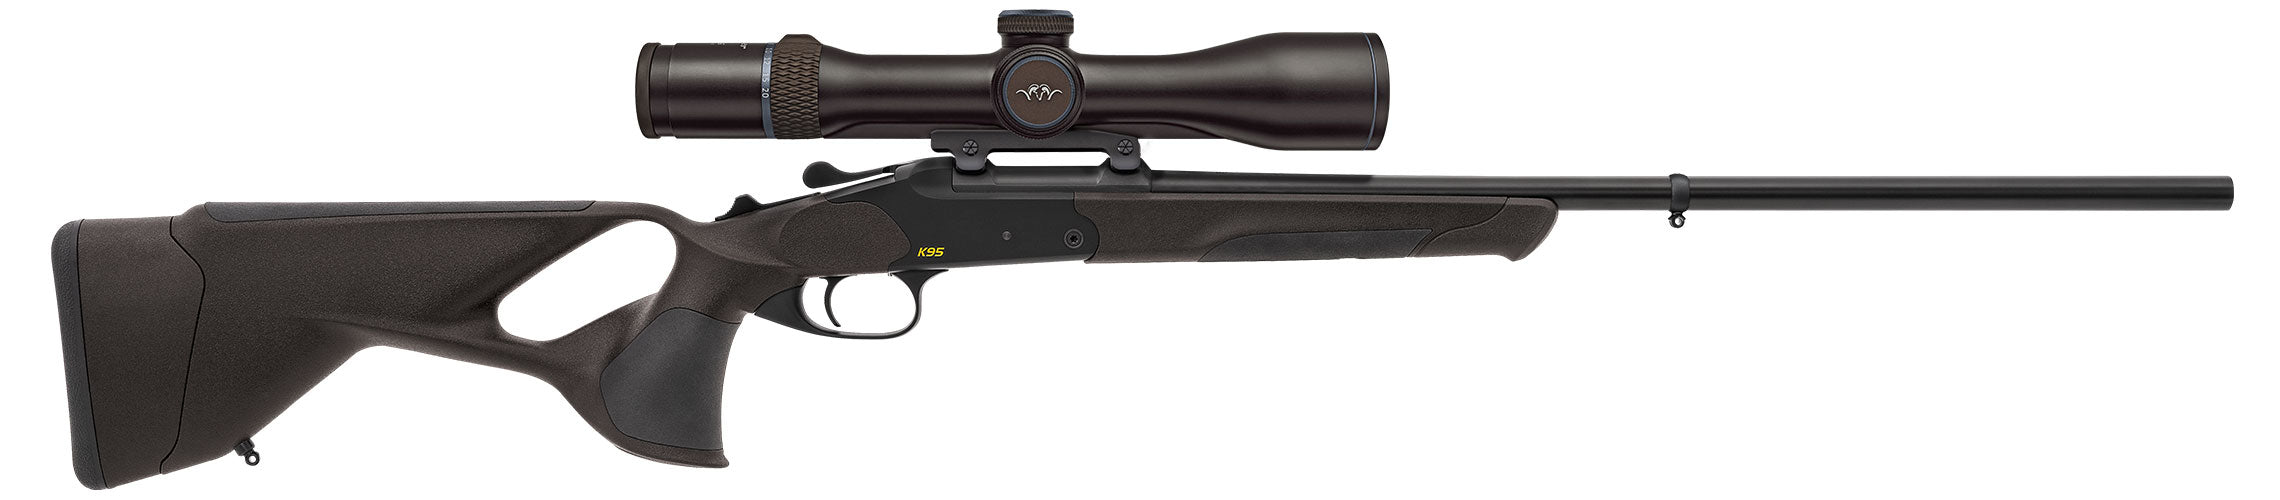 K95 Ultimate Single Shot Rifle